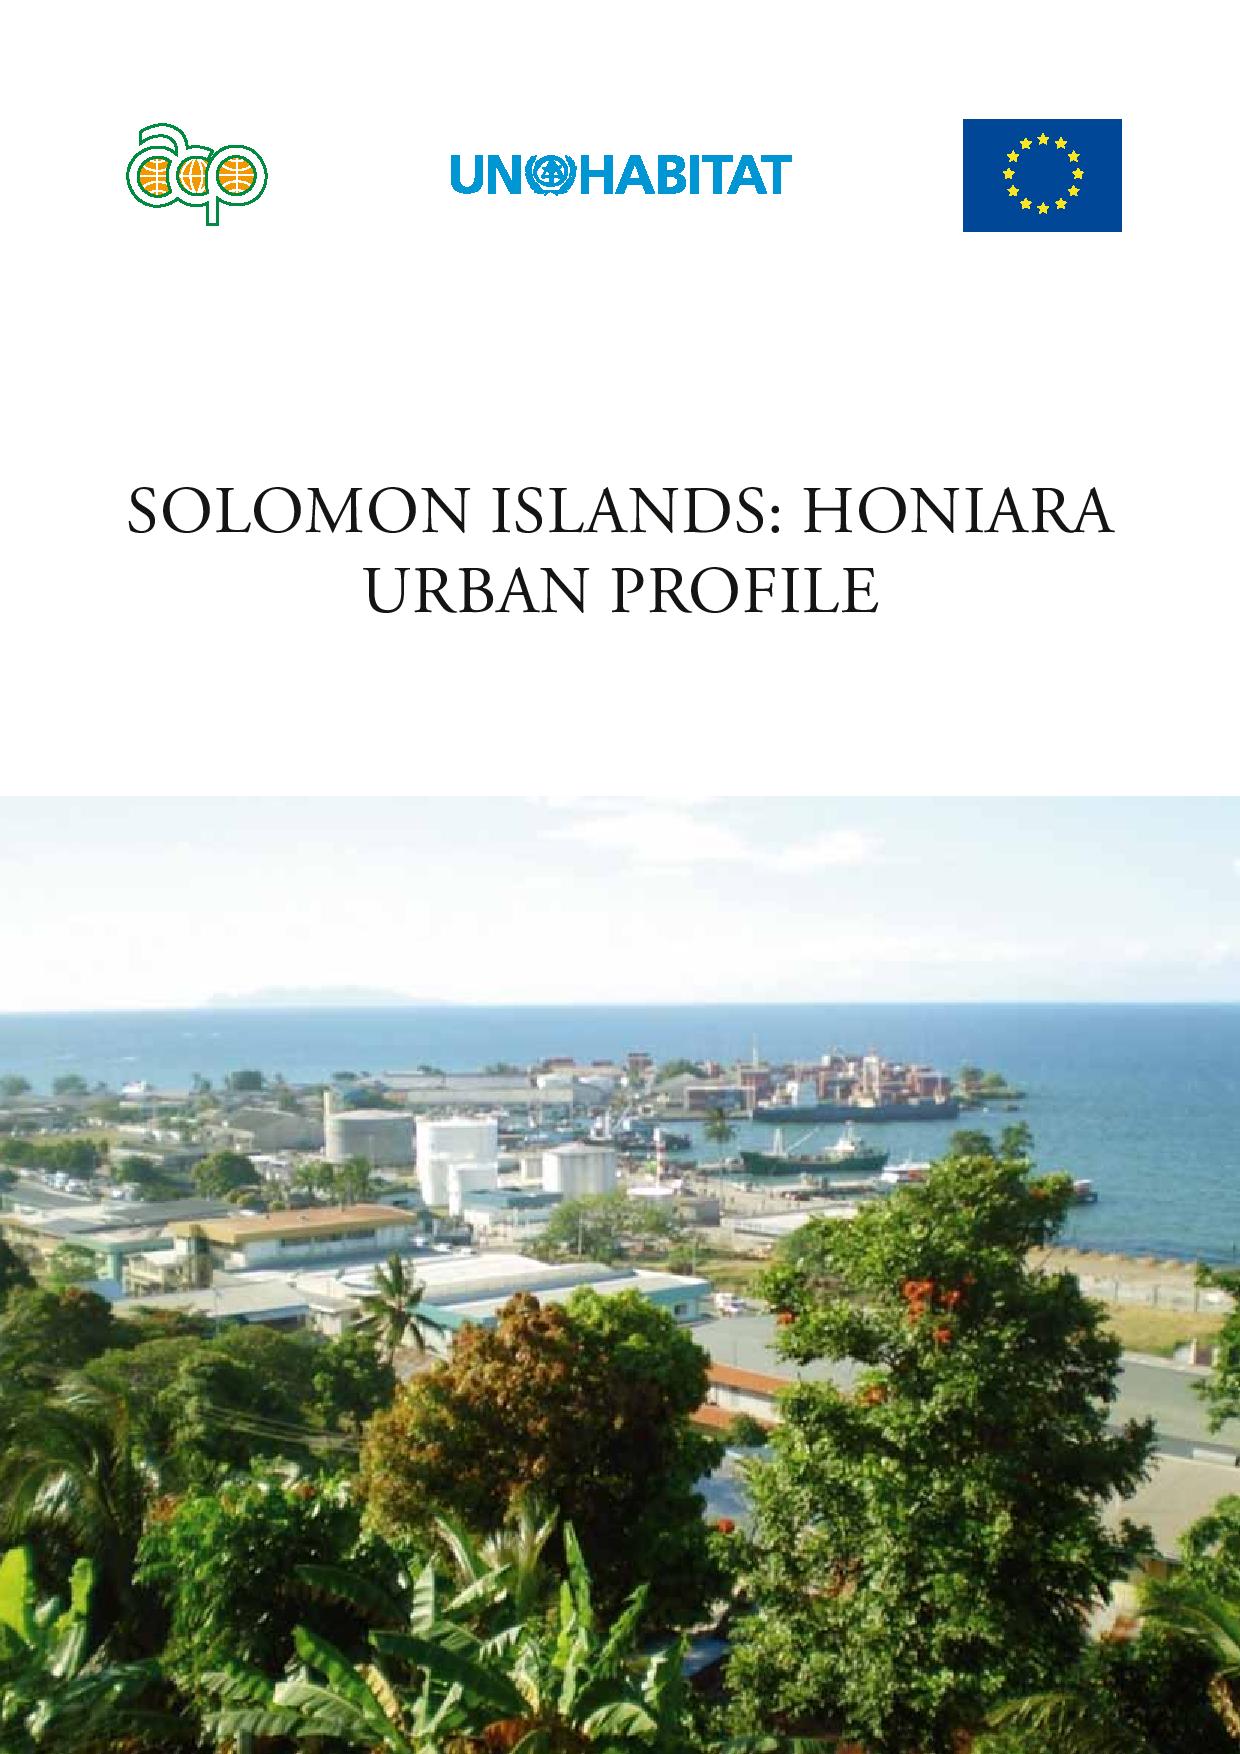 Solomon Islands: Honiara Urban Profile